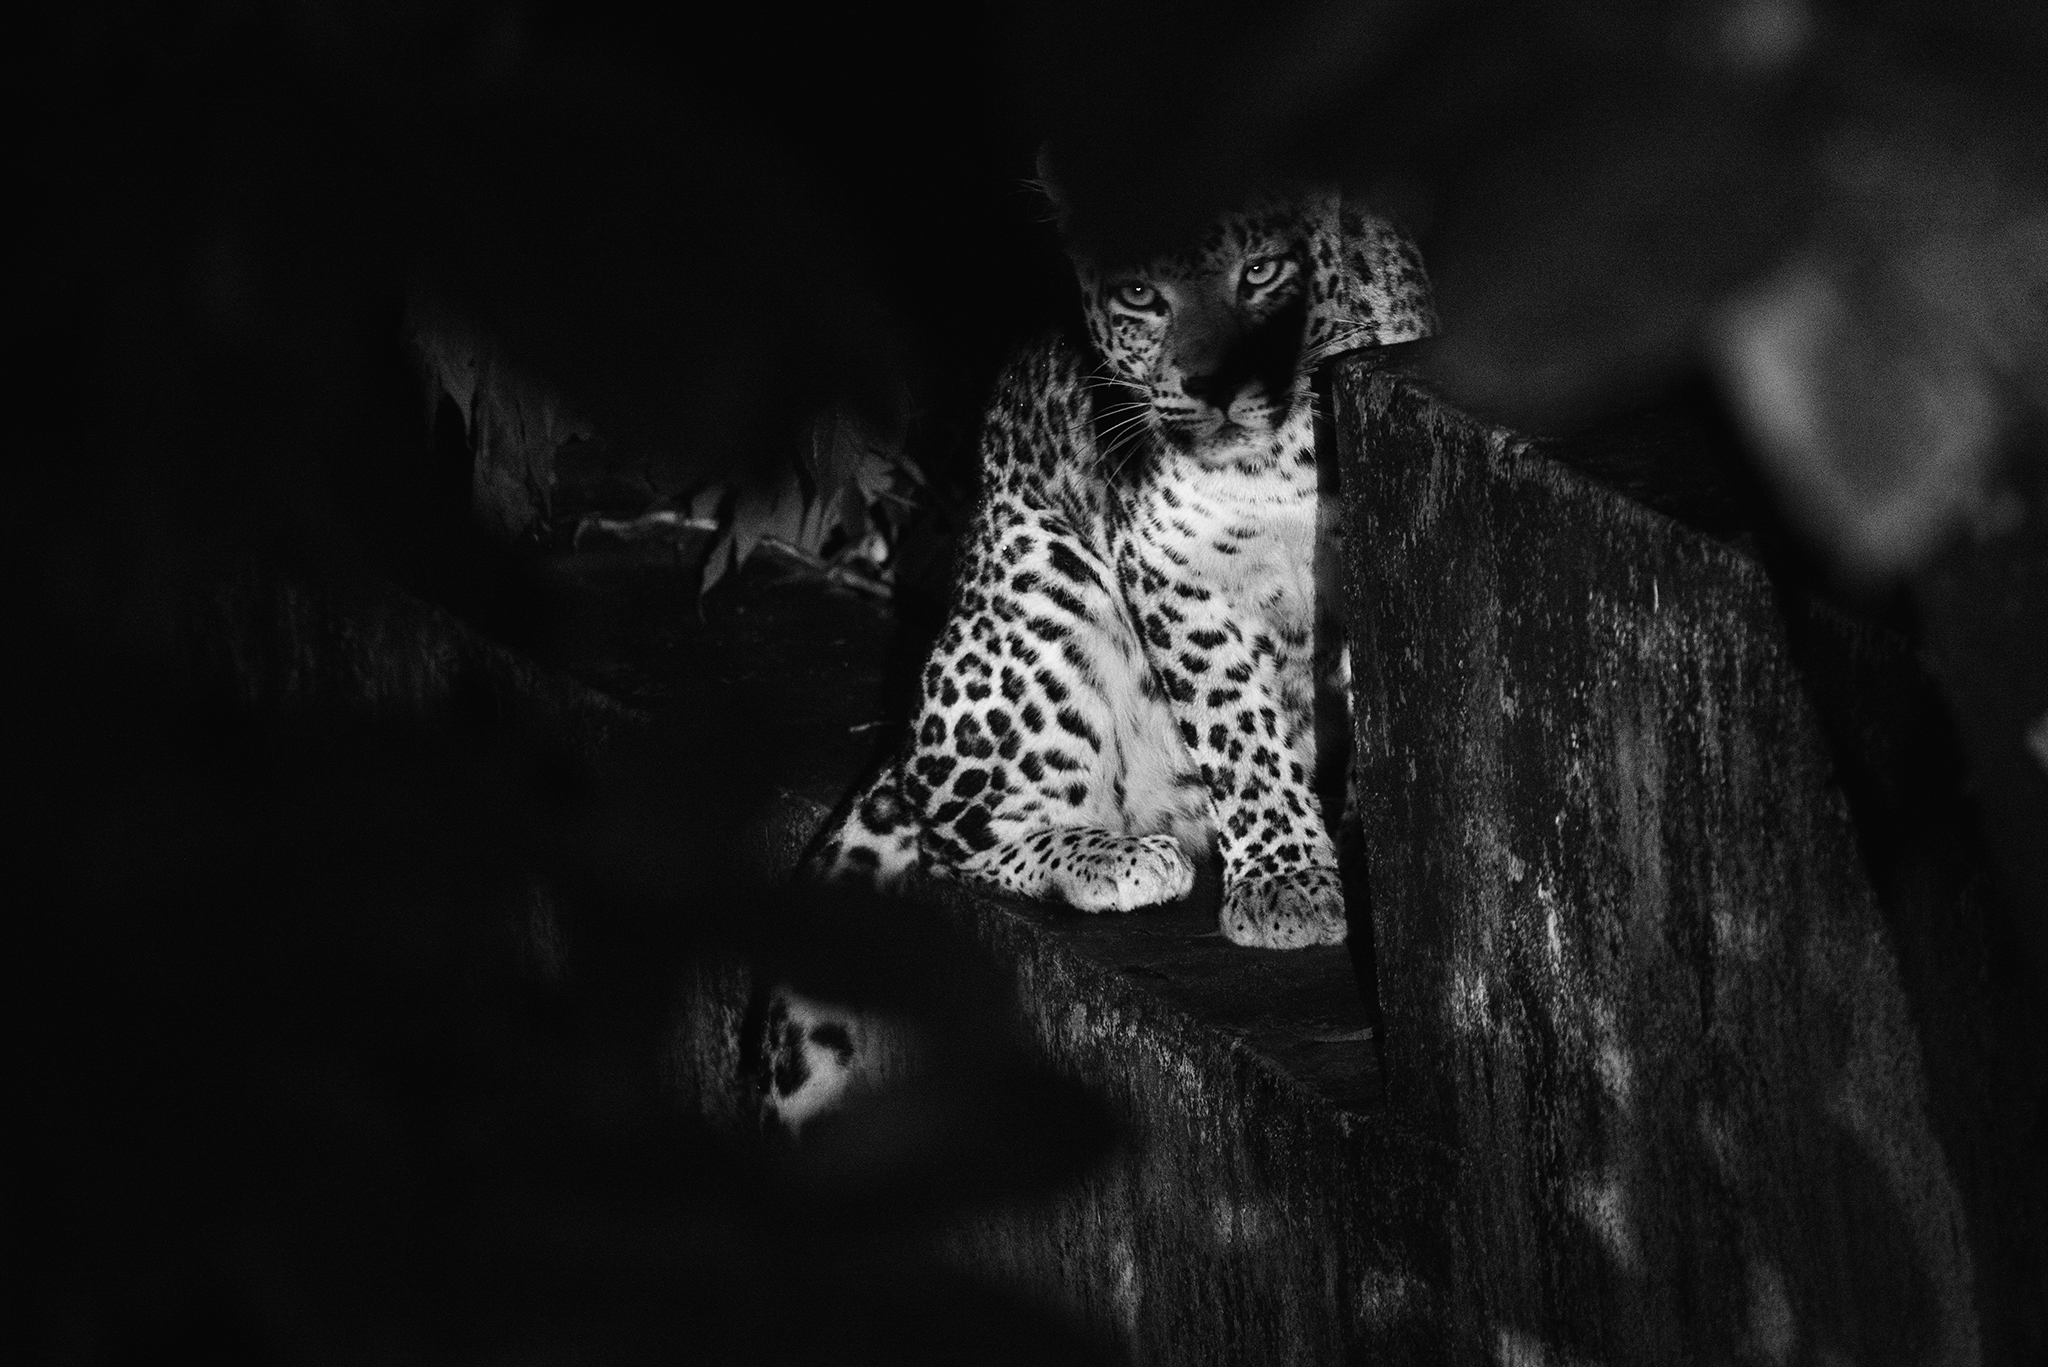 Leopard in human-use area_Ganesh Raghunathan